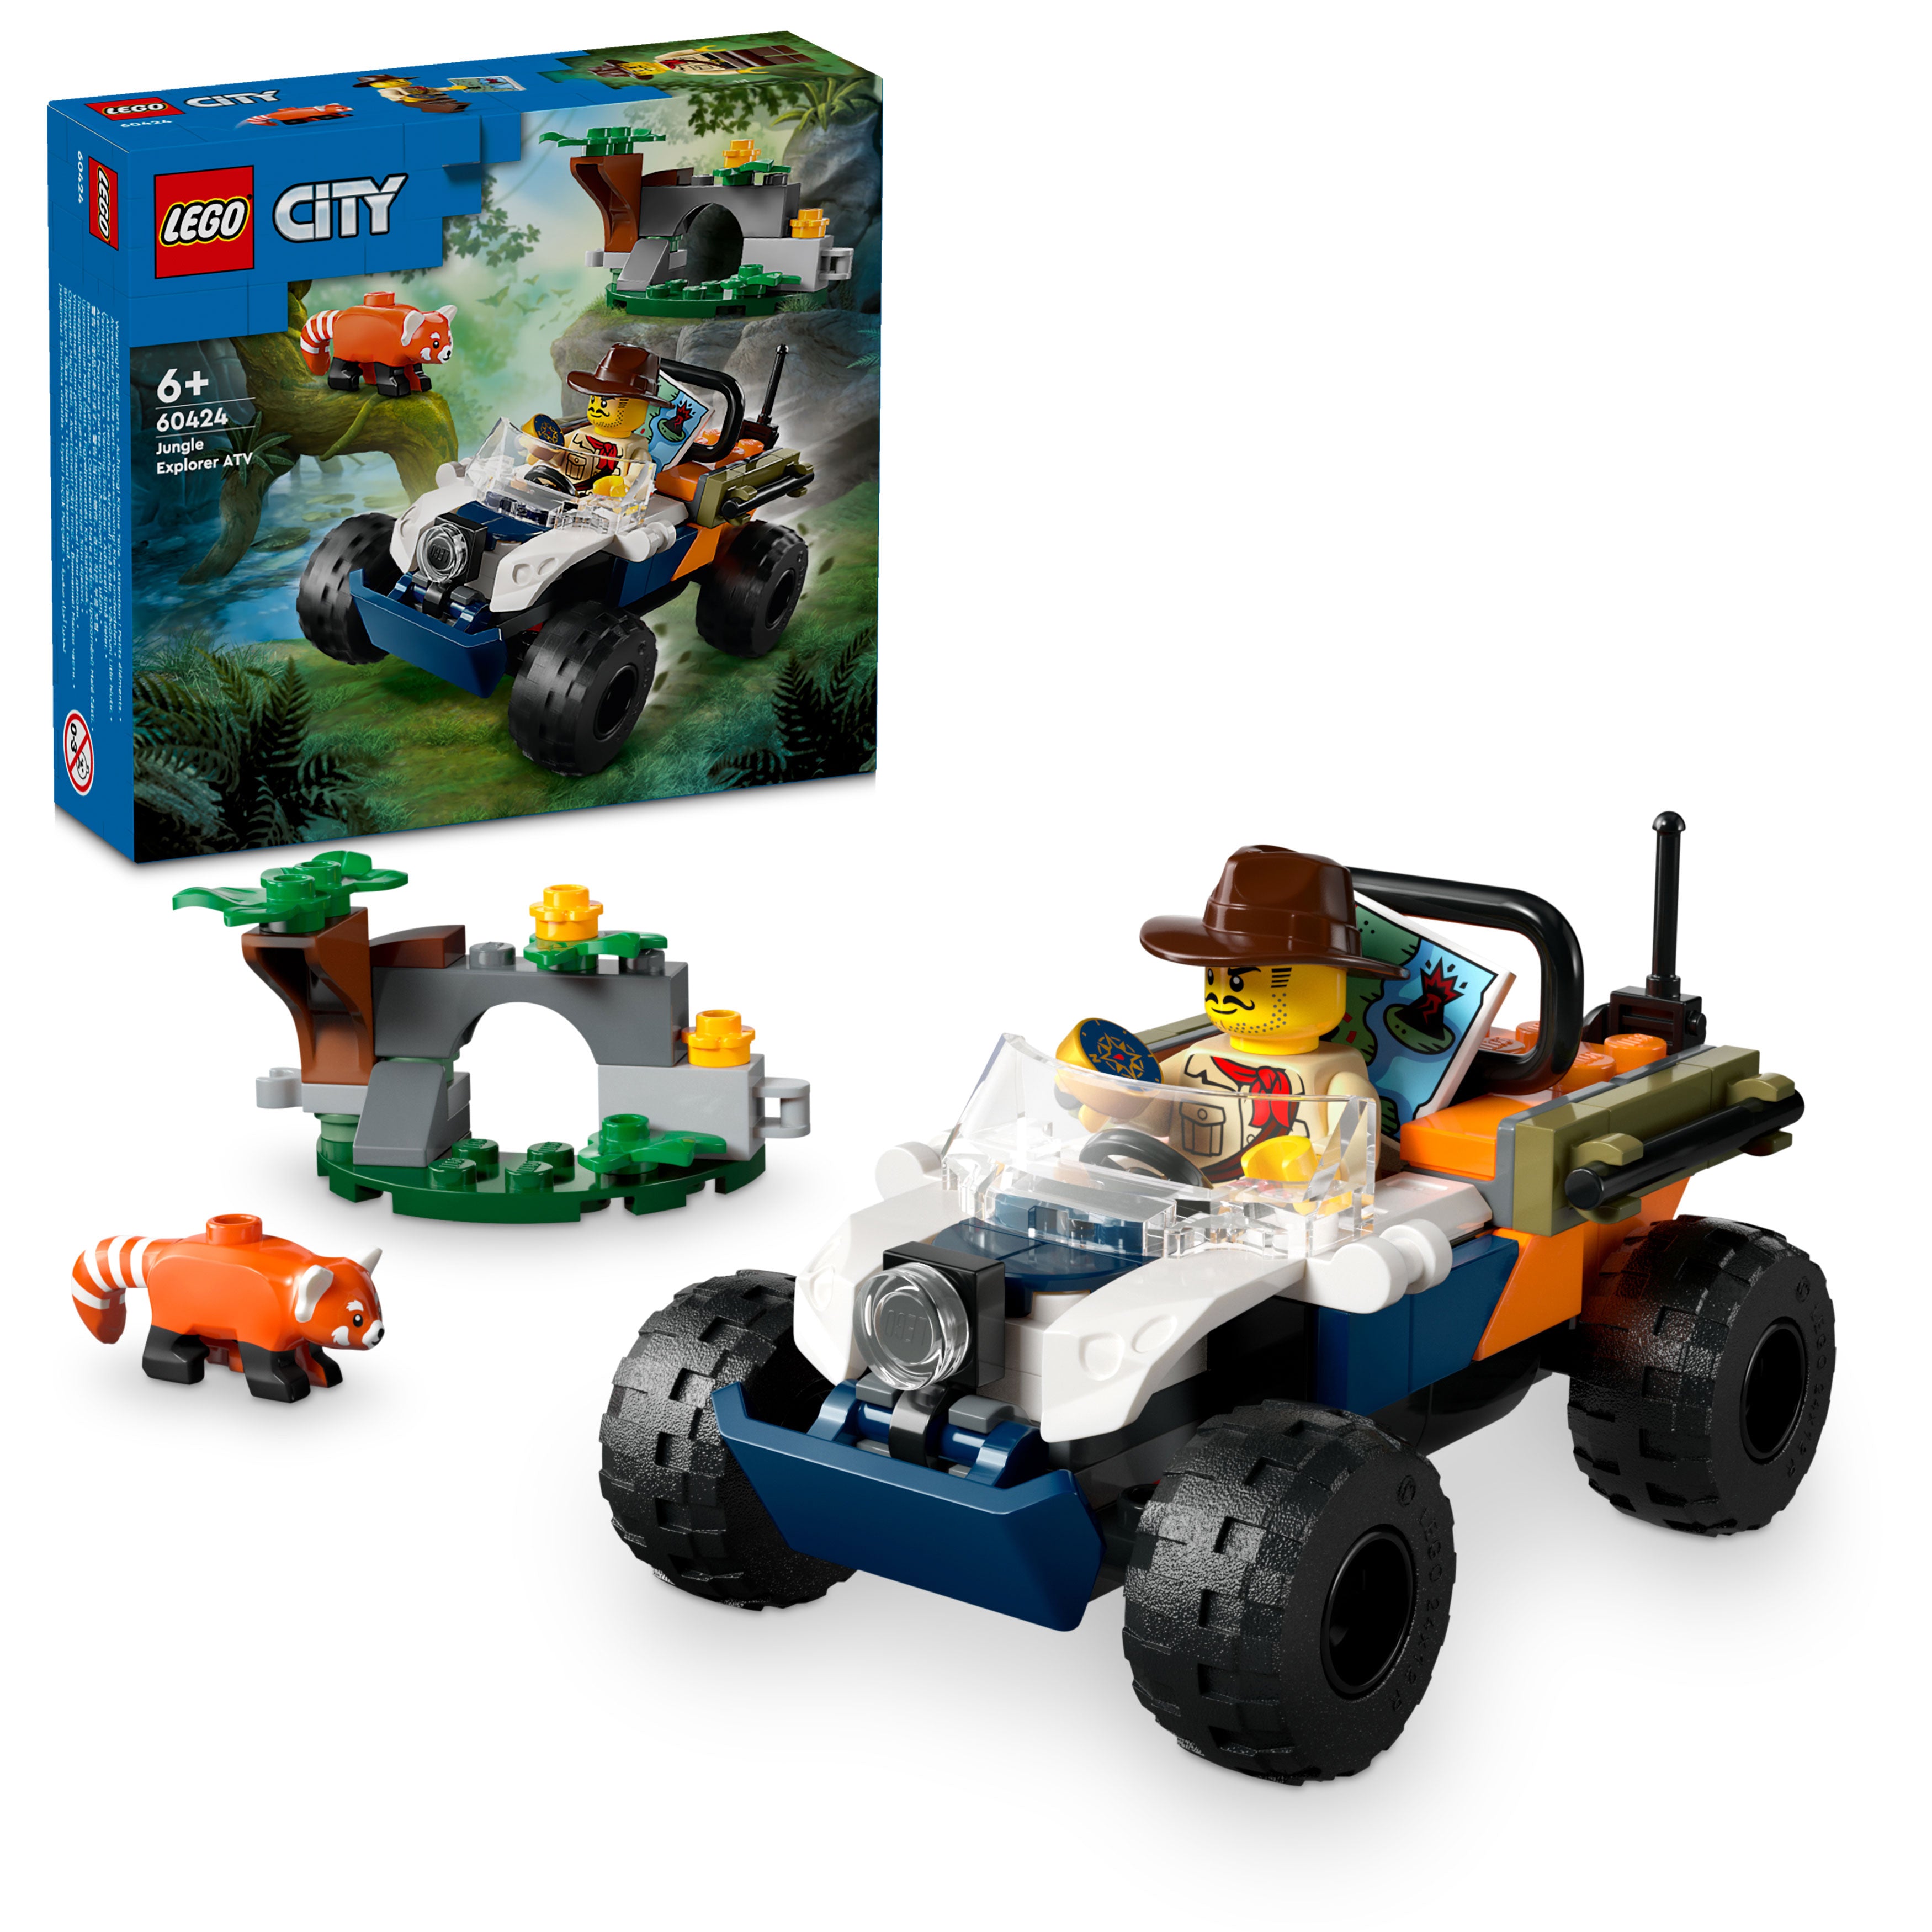 Lego 60424 Jungle Explorer ATV Red Panda Mission with "Johnny Thunder" Mini-Figure